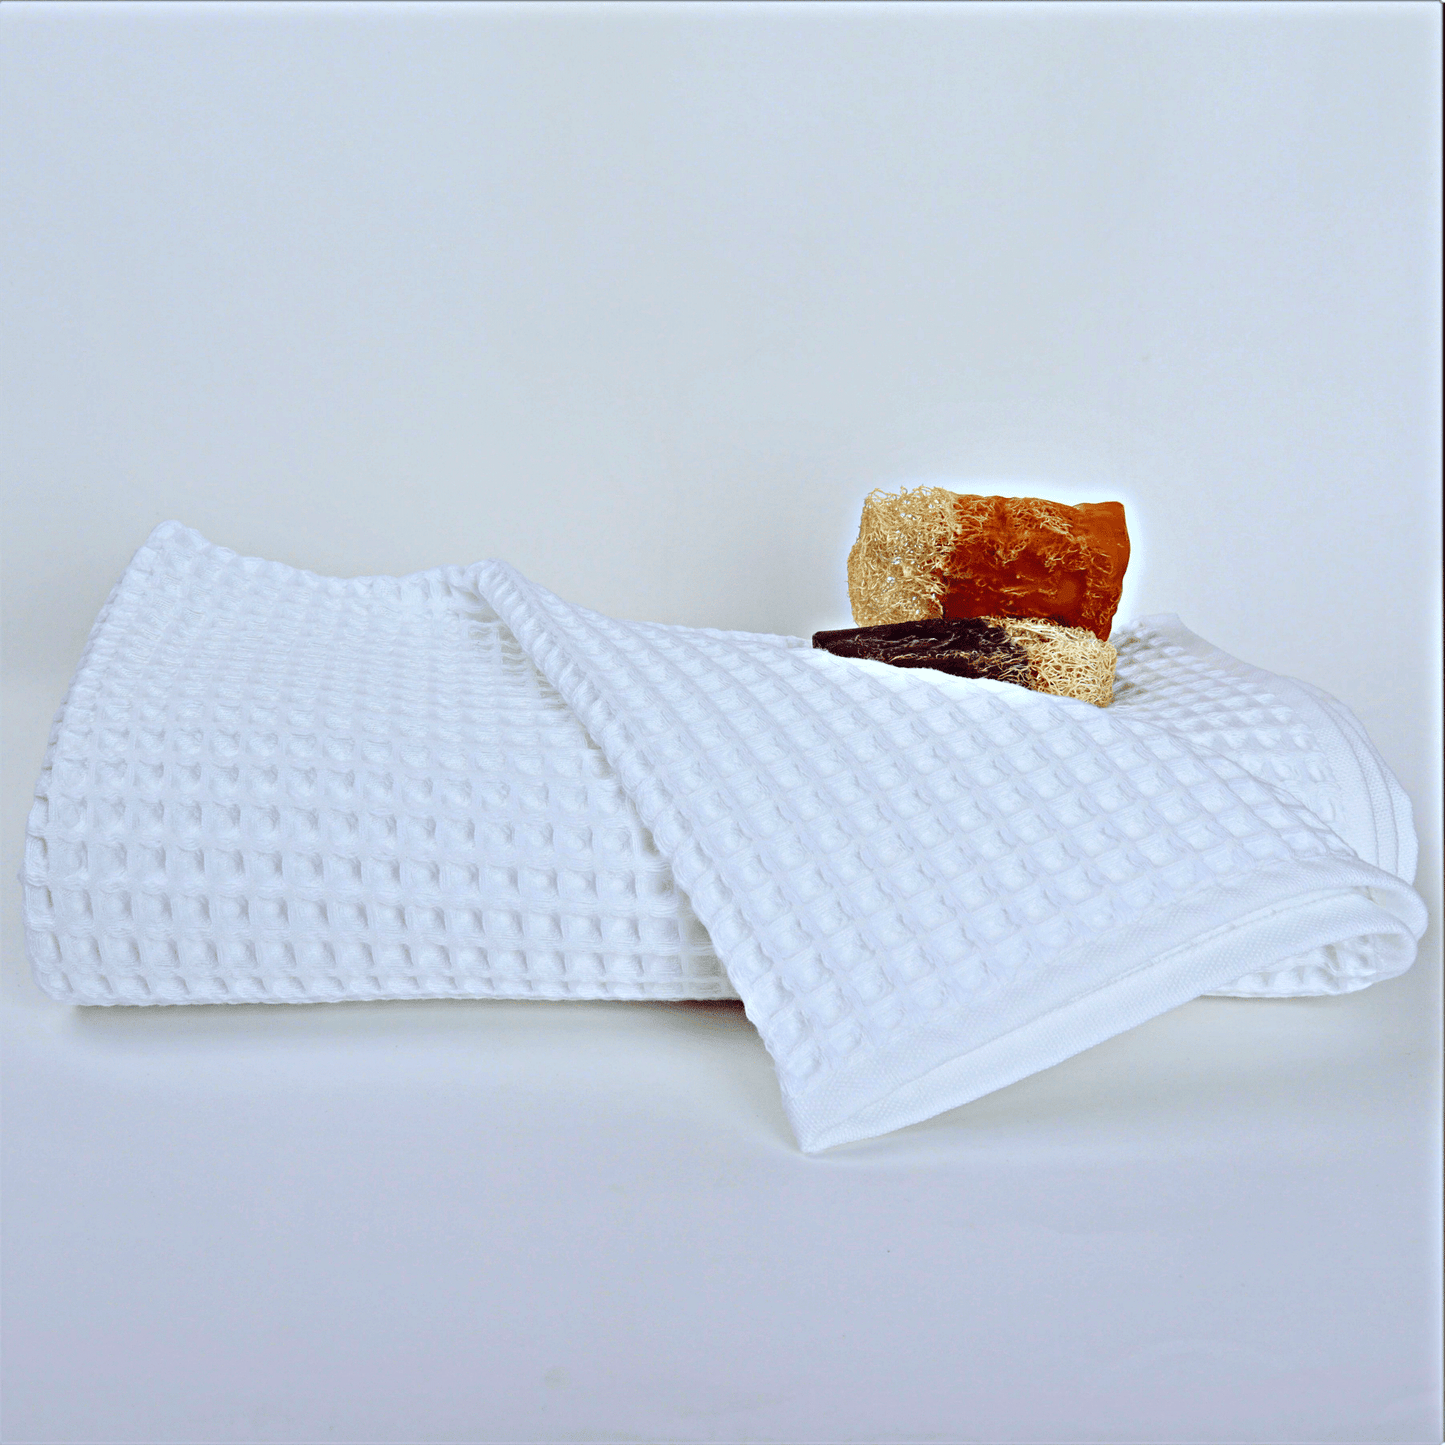 White Waffle Weave Towels Sets - 2 Bath, 2 Hand Towels